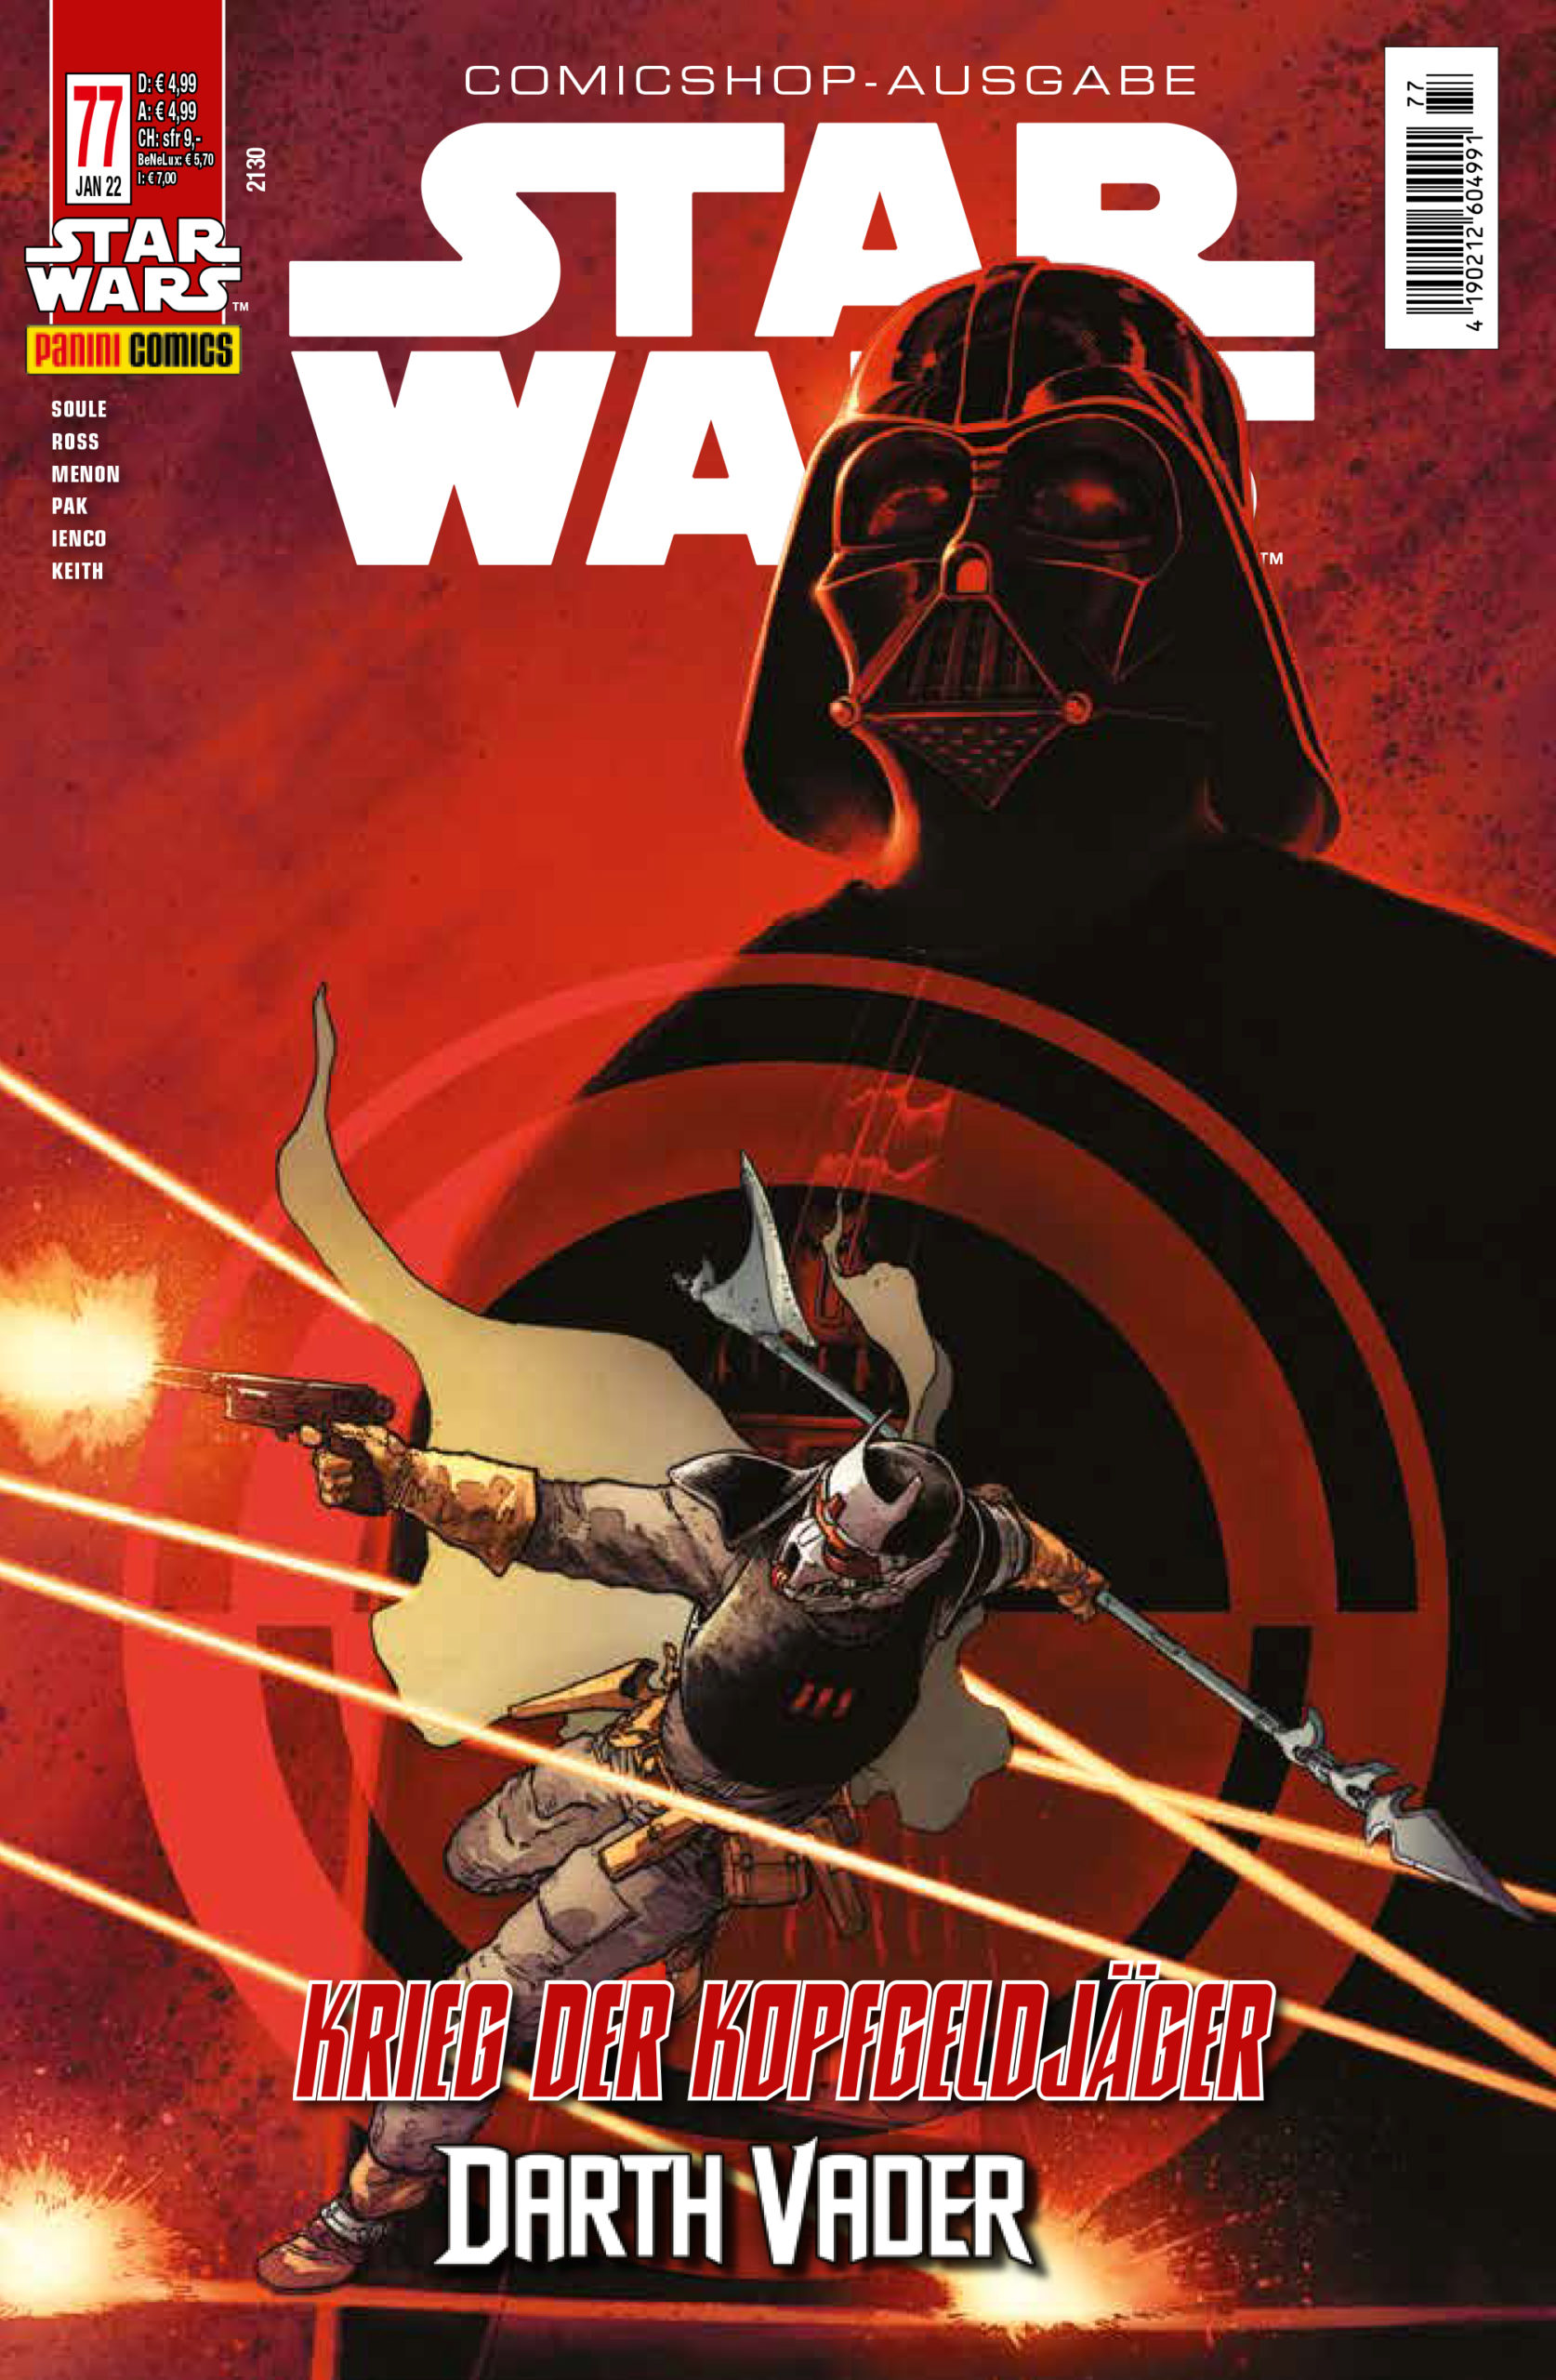 Star Wars #77 (Comicshop-Ausgabe) (15.12.2021)